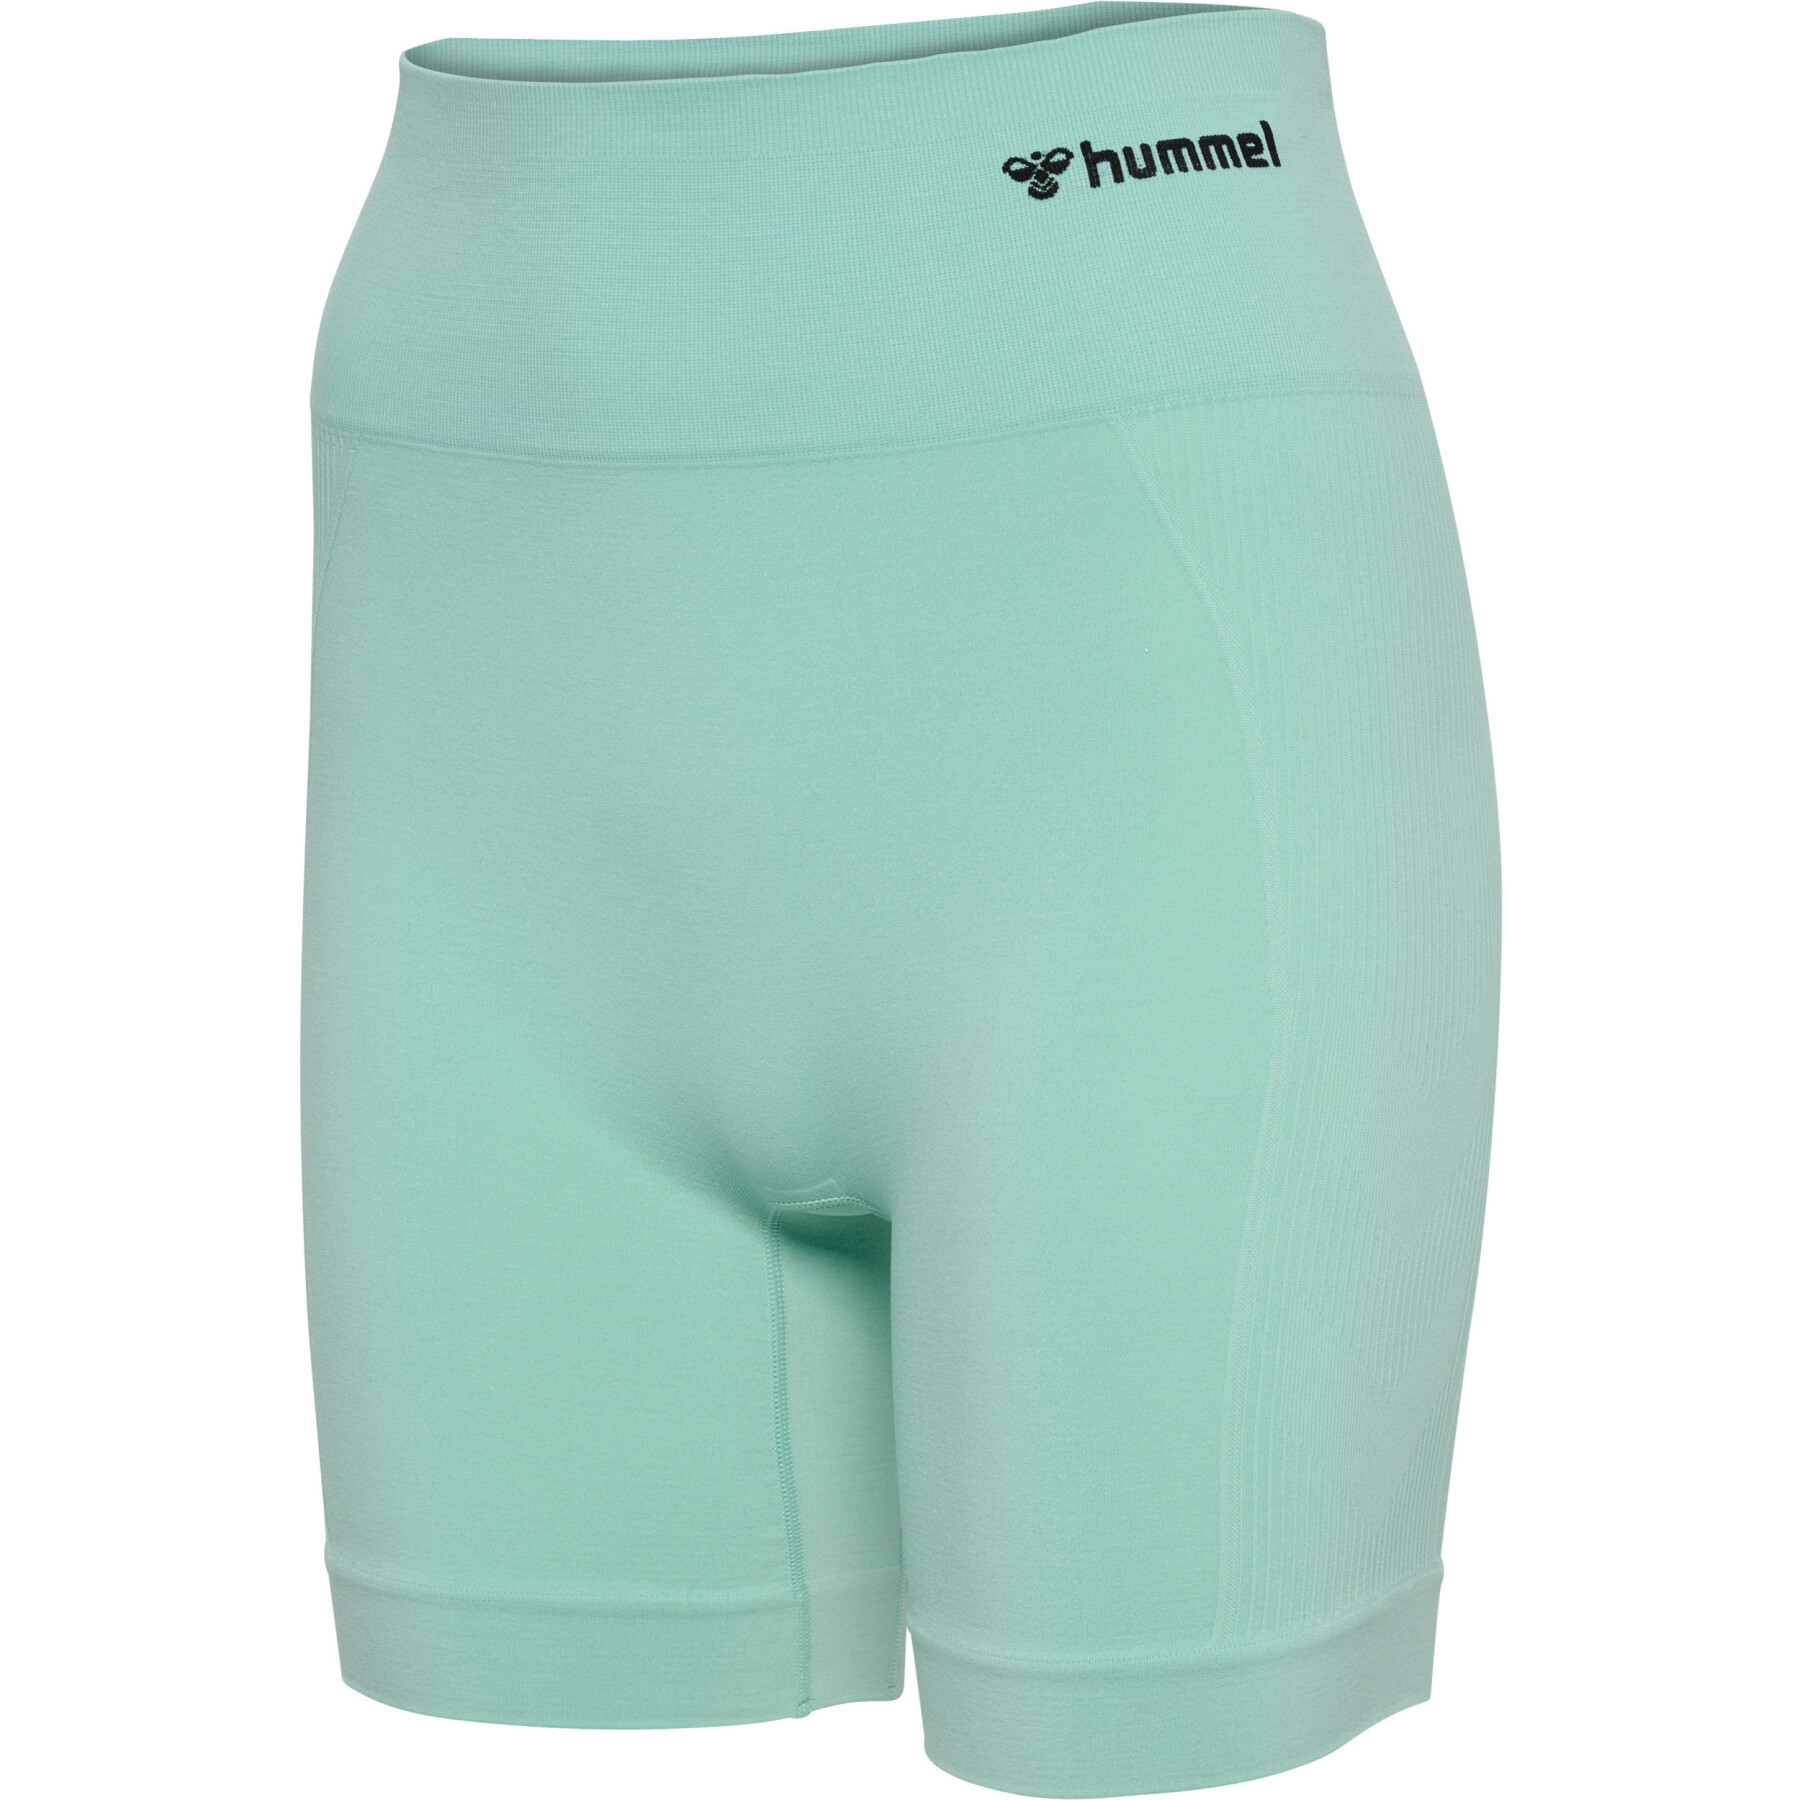 Hummel Hmltif Seamless Cyling Shorts - black buy online